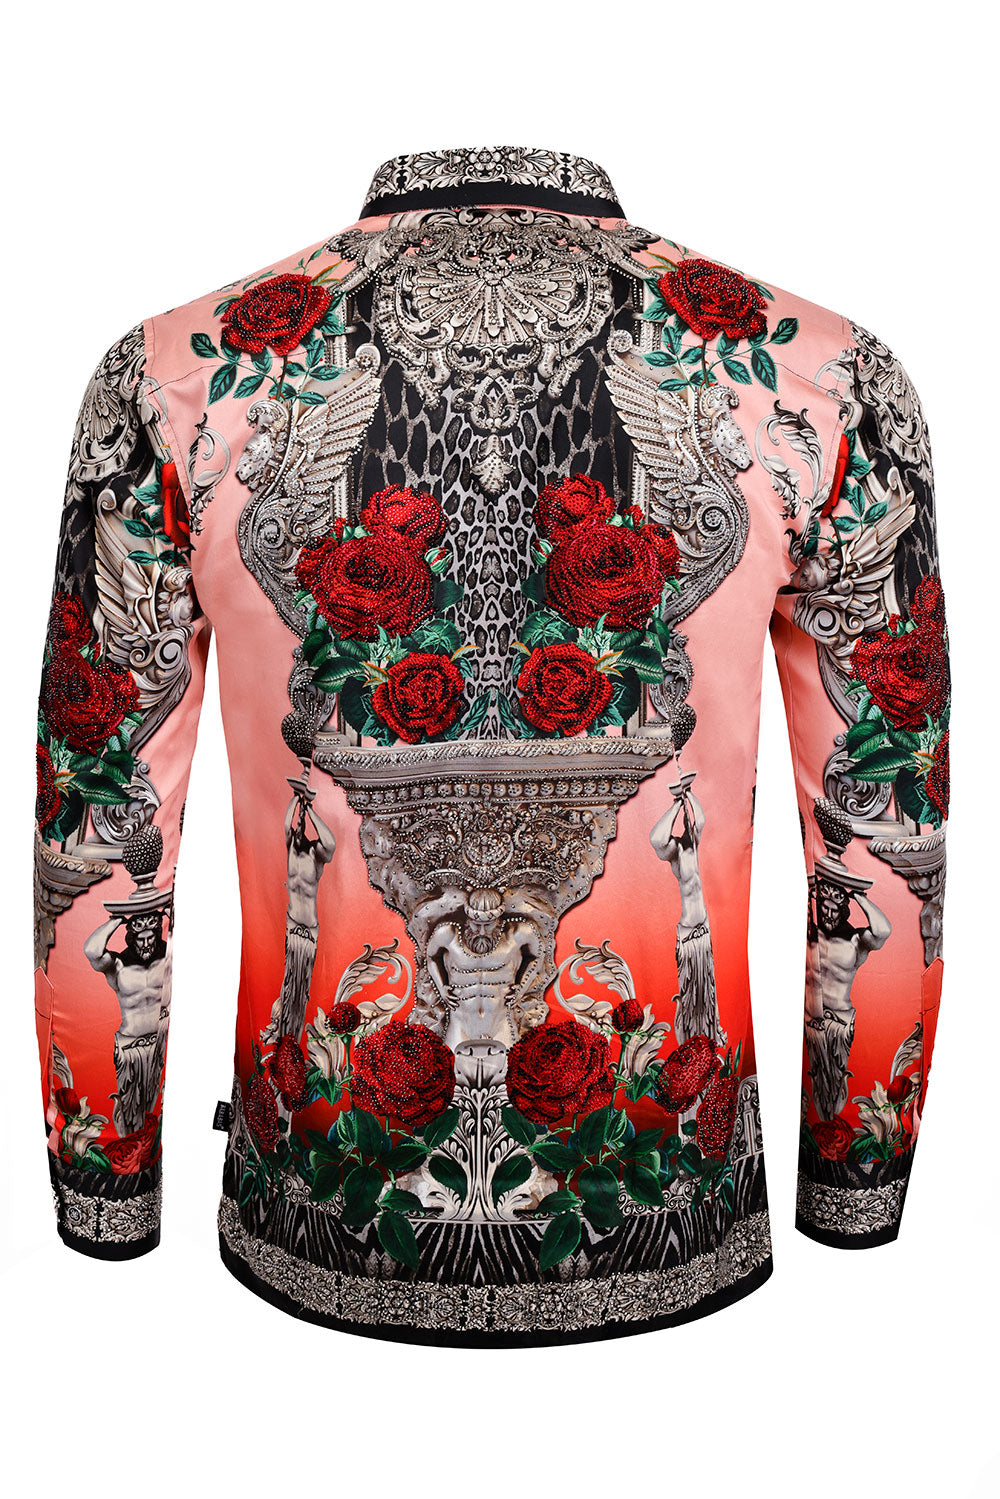 BARABAS Men's Rhinestone Floral Unicorn Long Sleeve Shirts 3SPR418 Pink